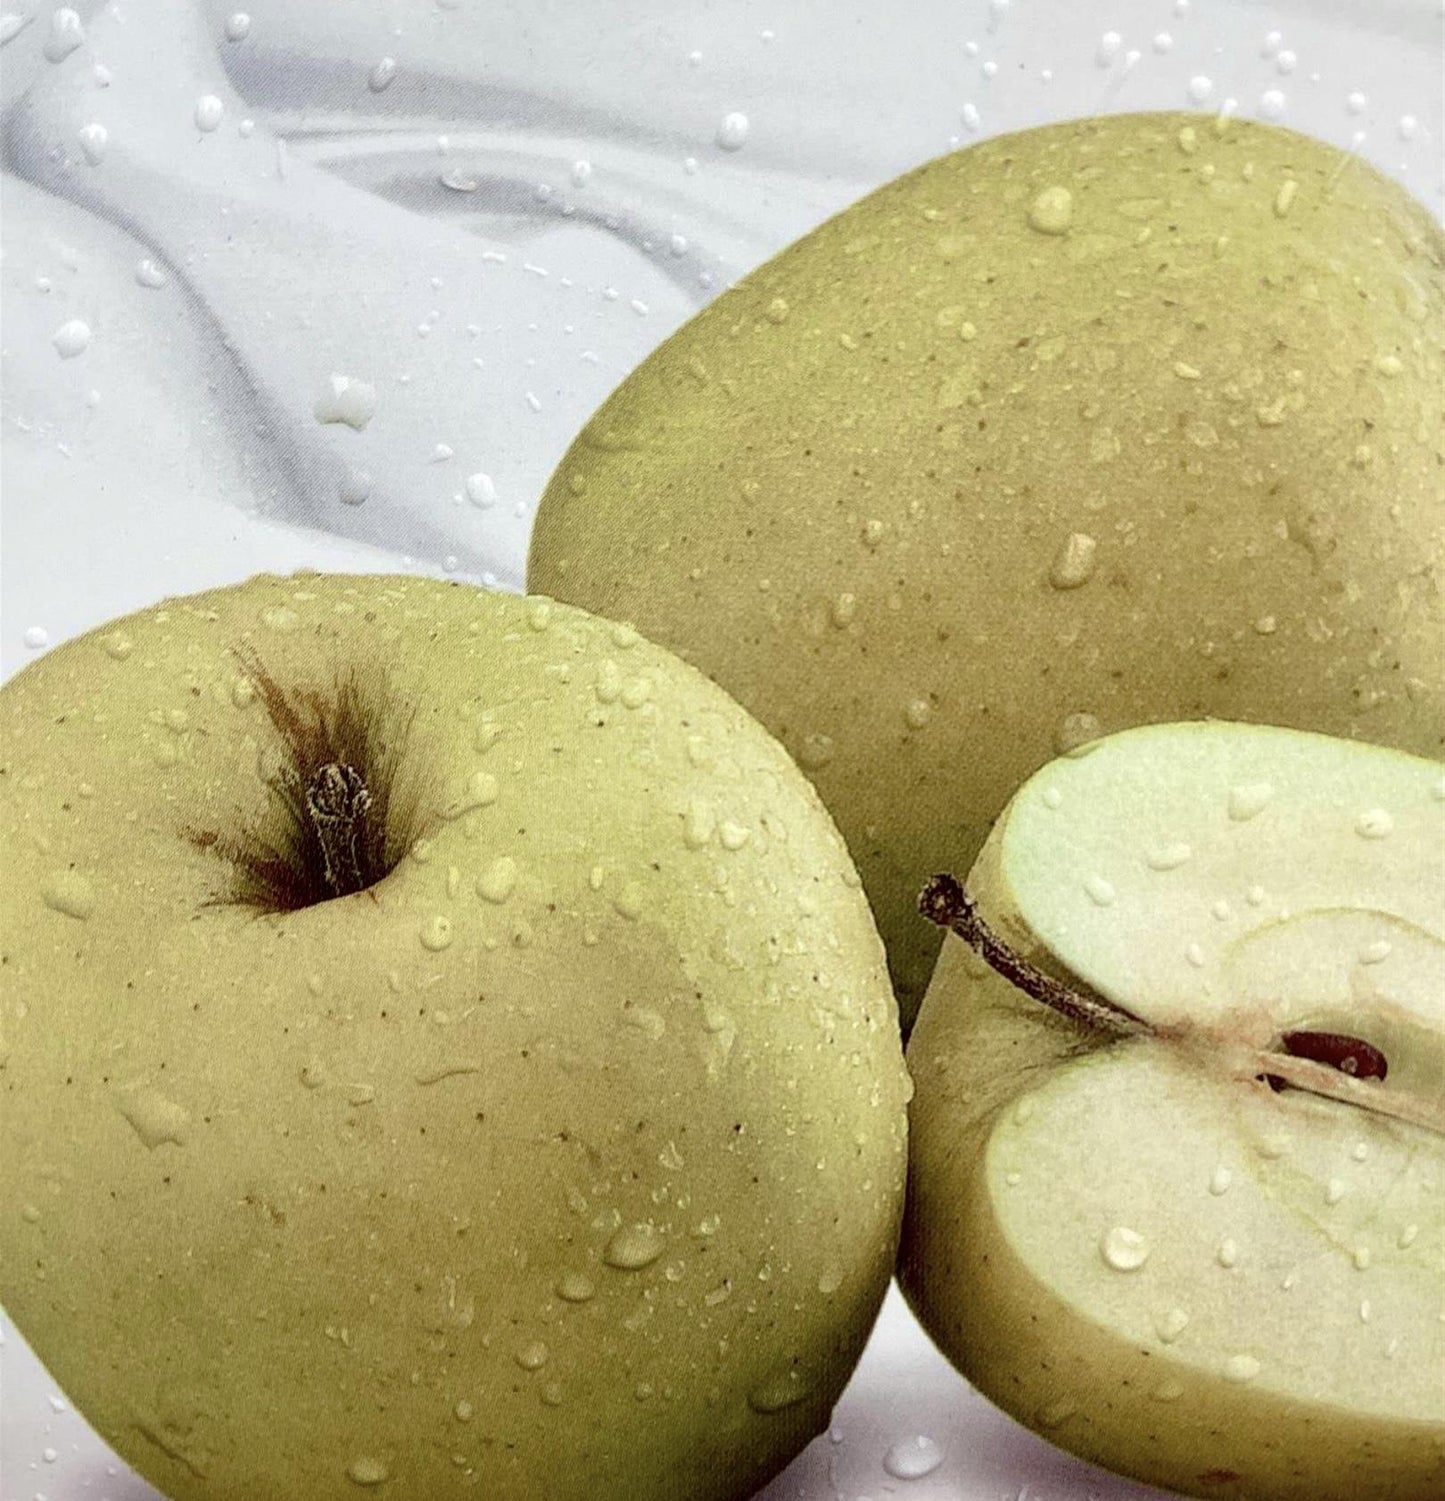 Apple tree 'Golden Delicious' | Malus Domestica - M26 - Dwarfing - 140-150cm - 10lt